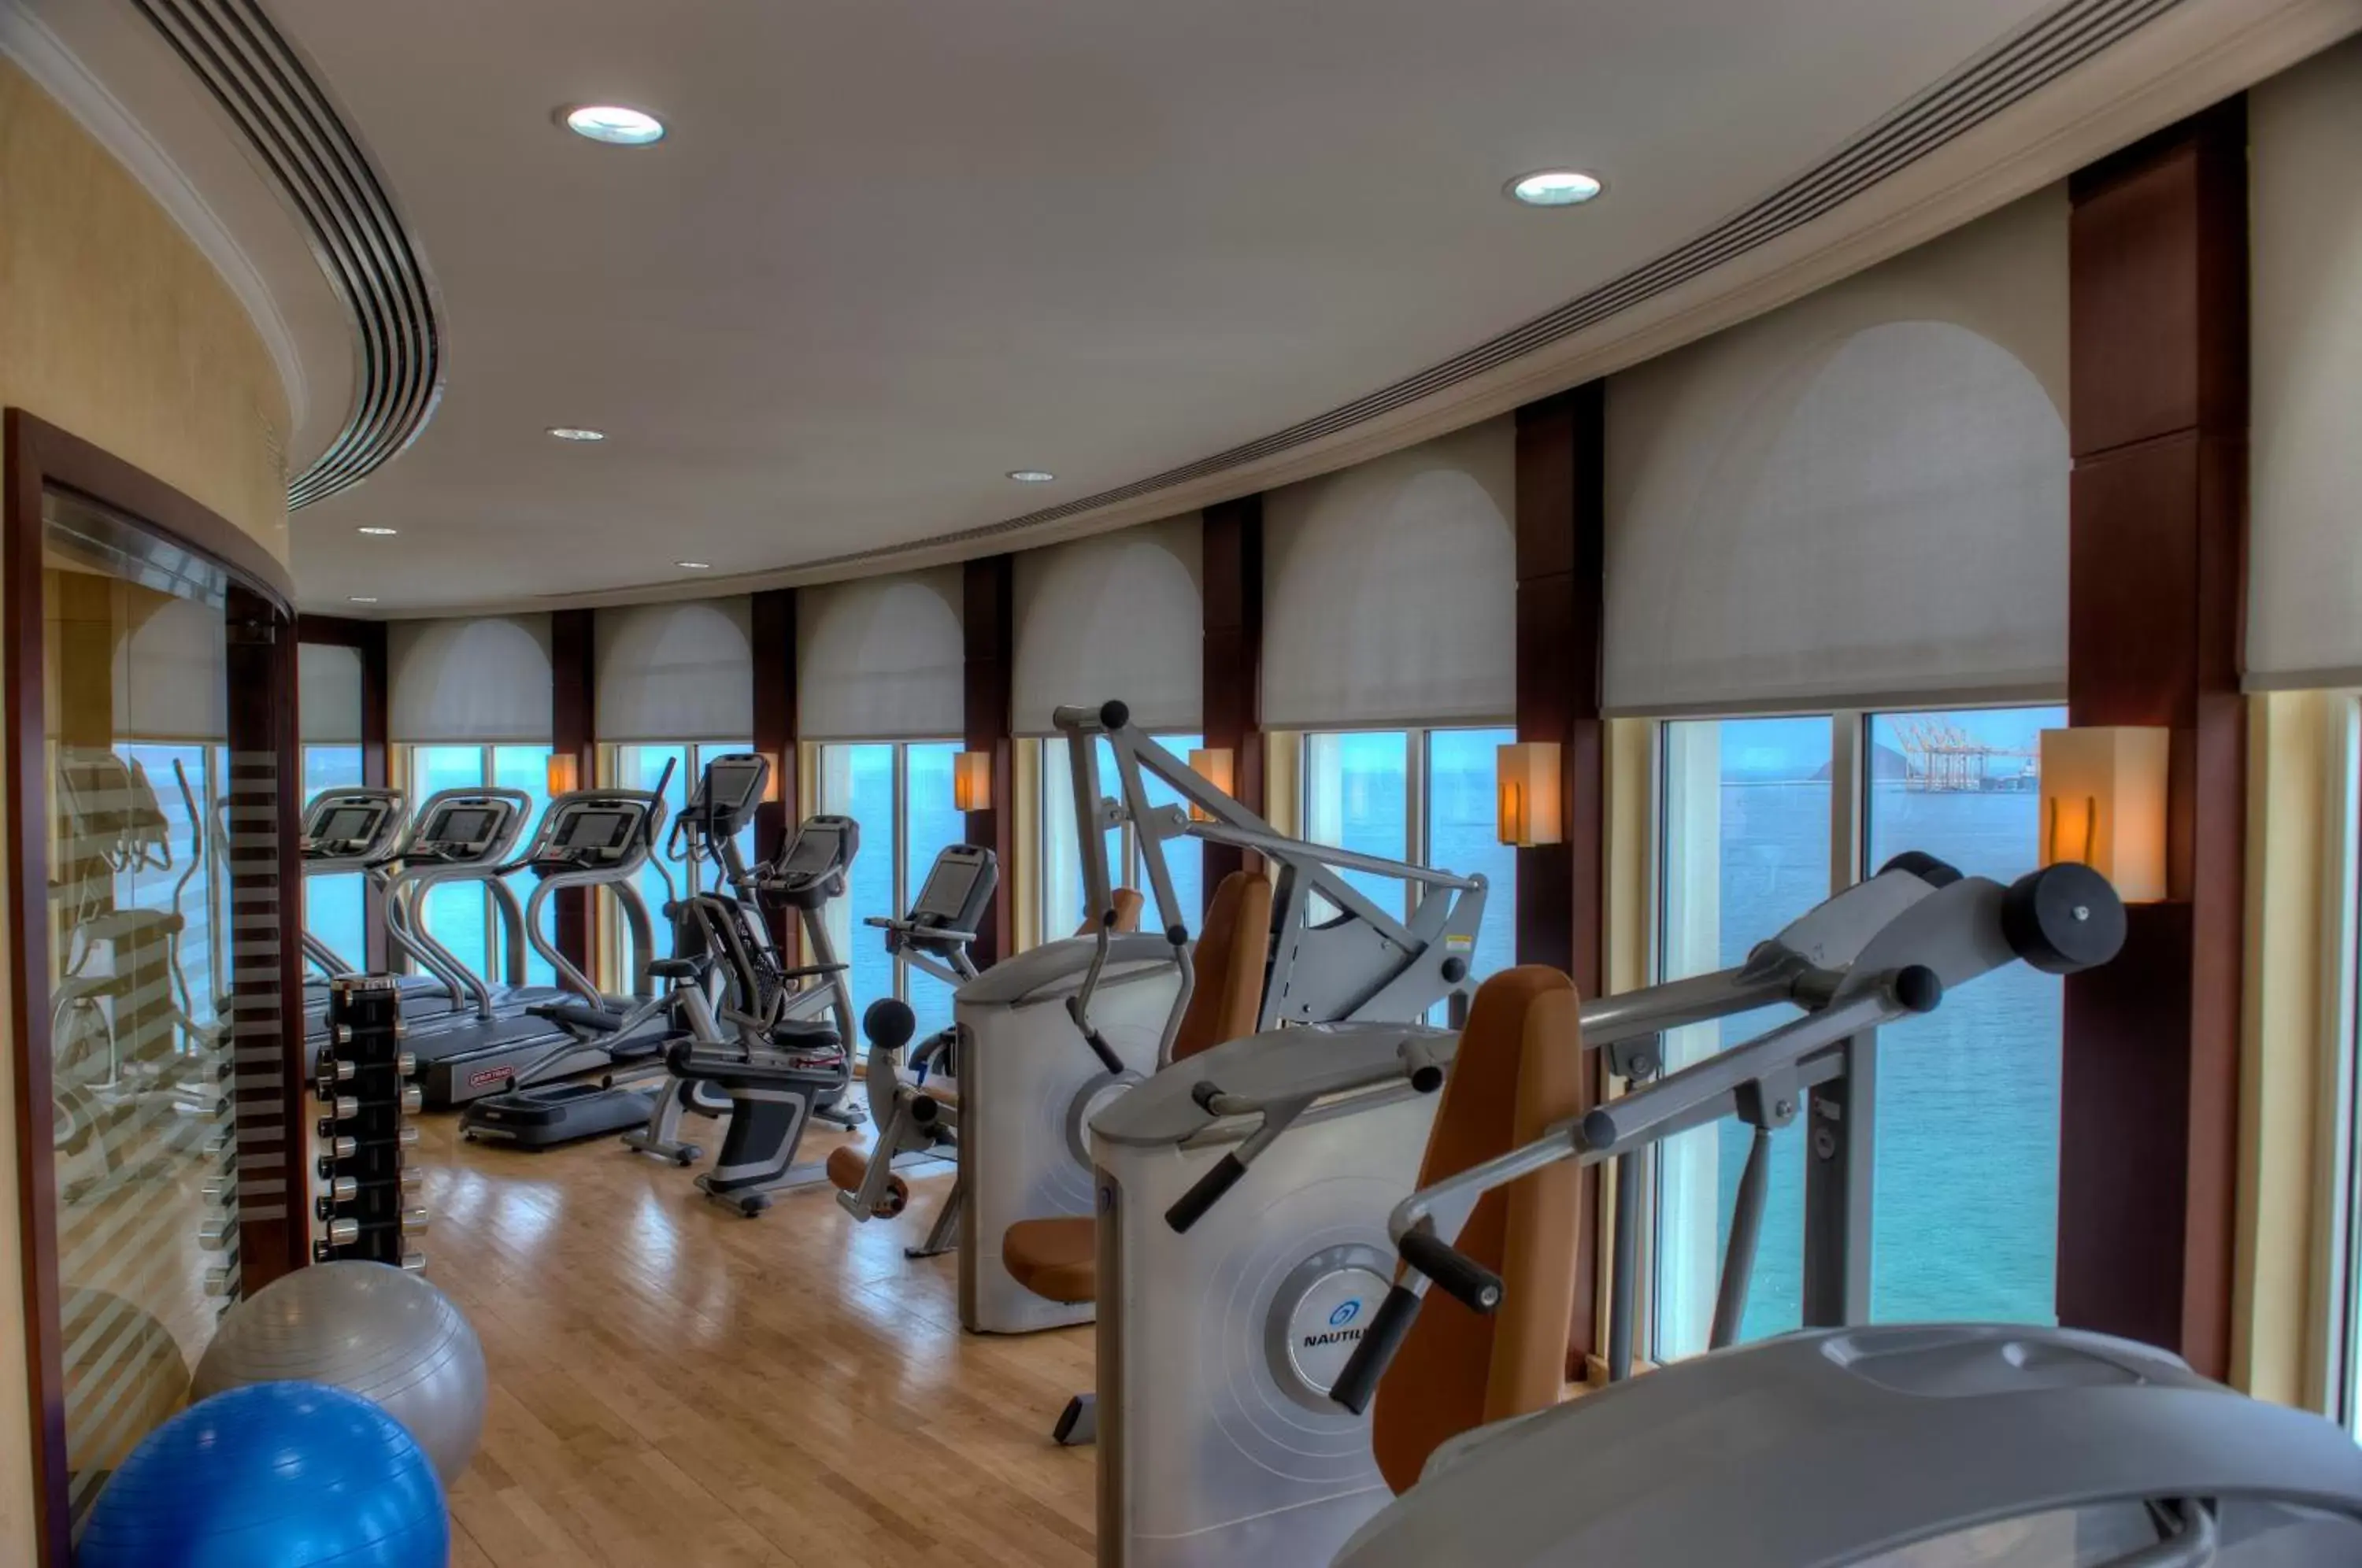 Fitness centre/facilities, Fitness Center/Facilities in Oceanic Khorfakkan Resort & Spa